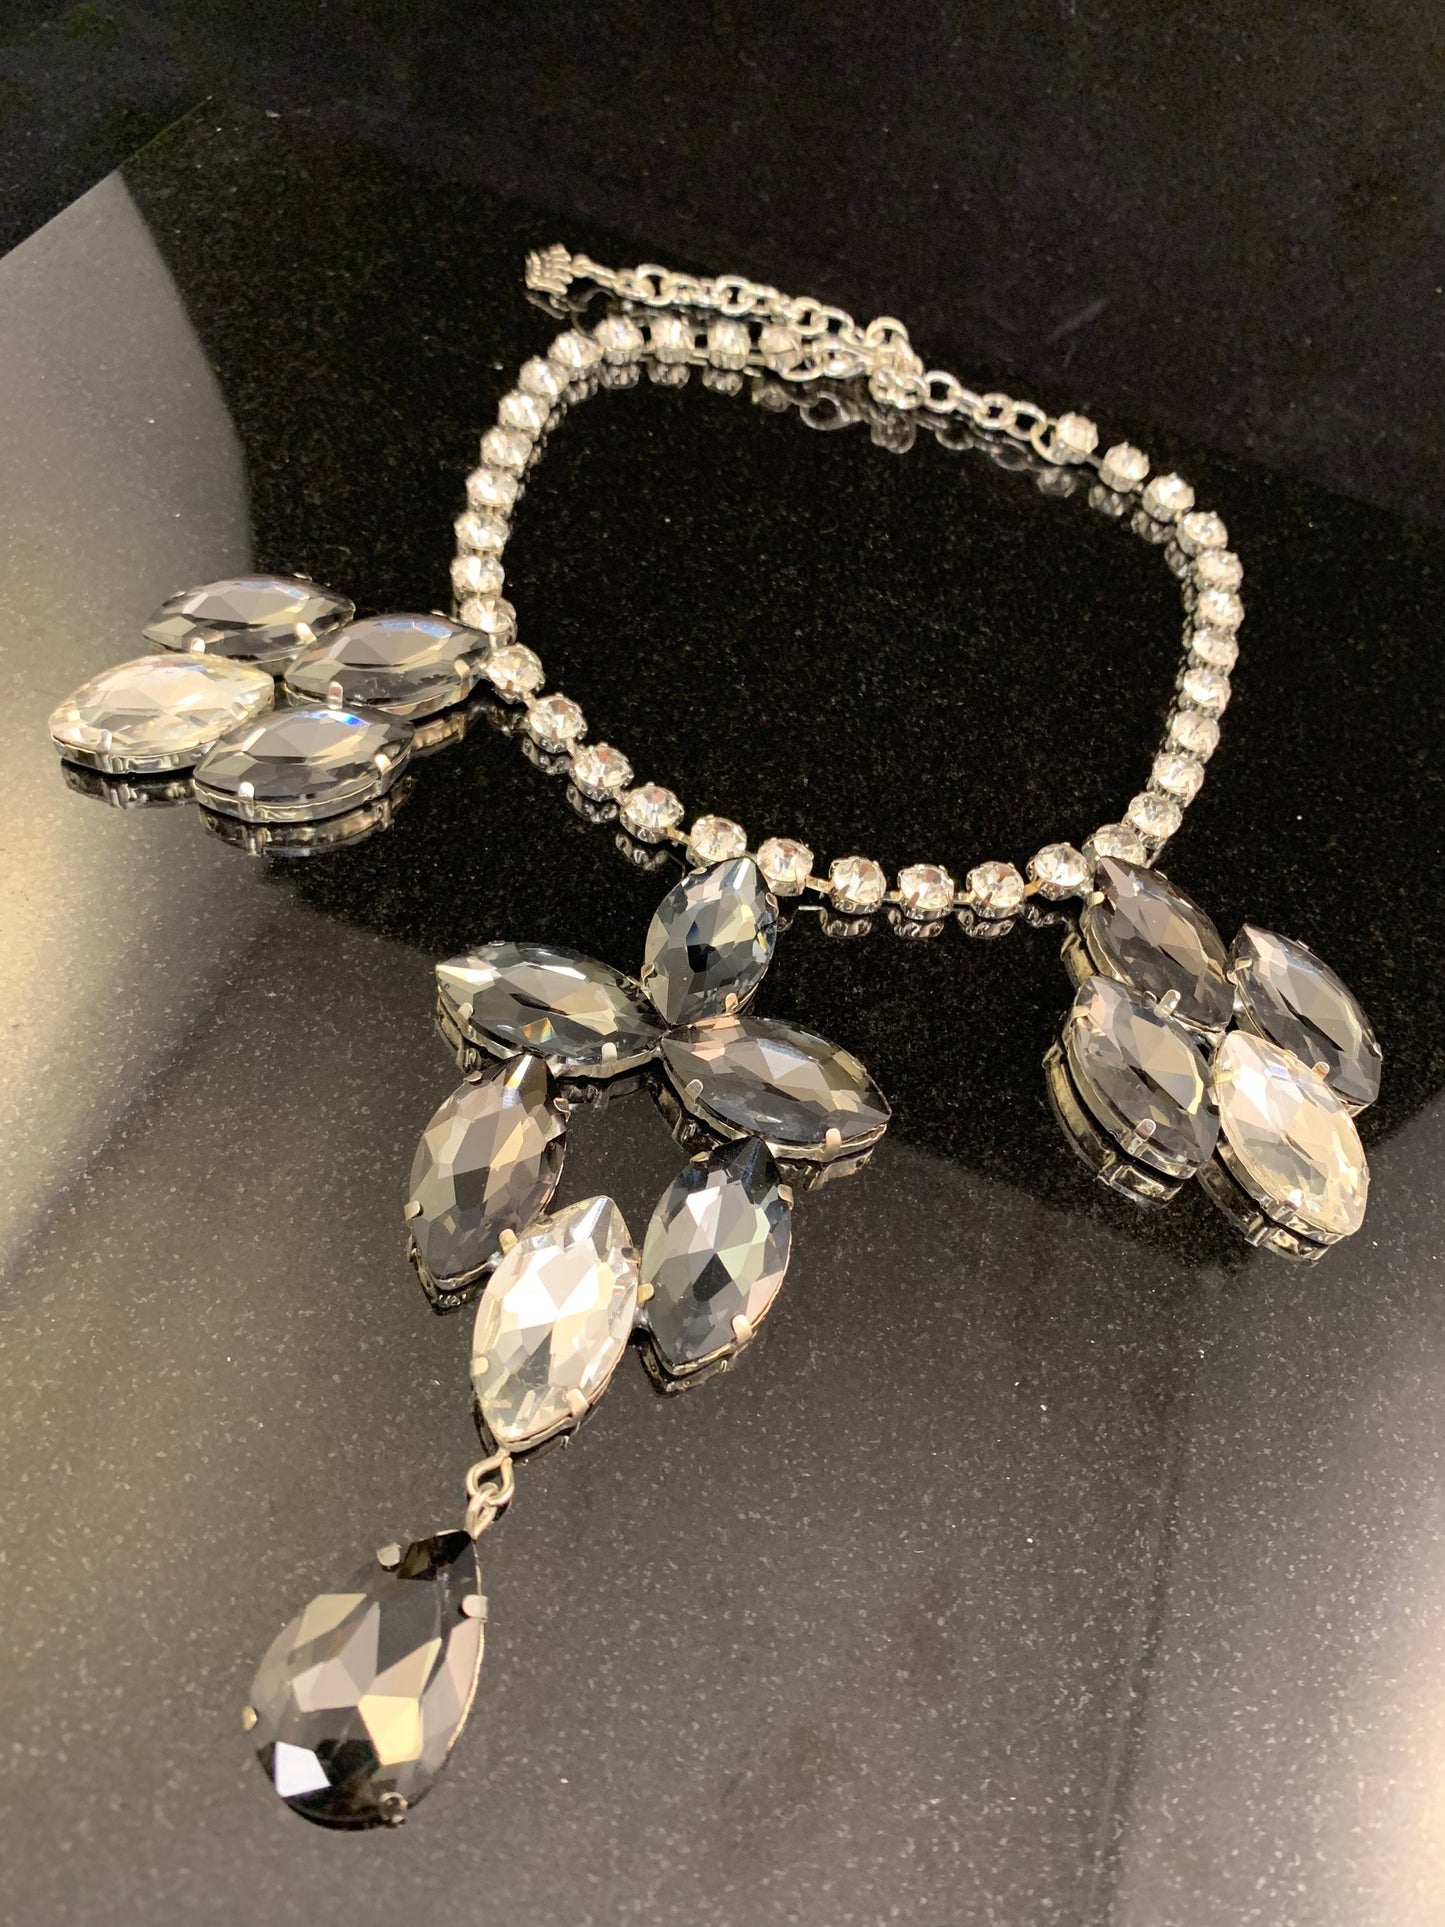 Black diamond Pendent Necklace / Adjustable / Drag Queen Costume Jewelry / Cocktails Jewellery